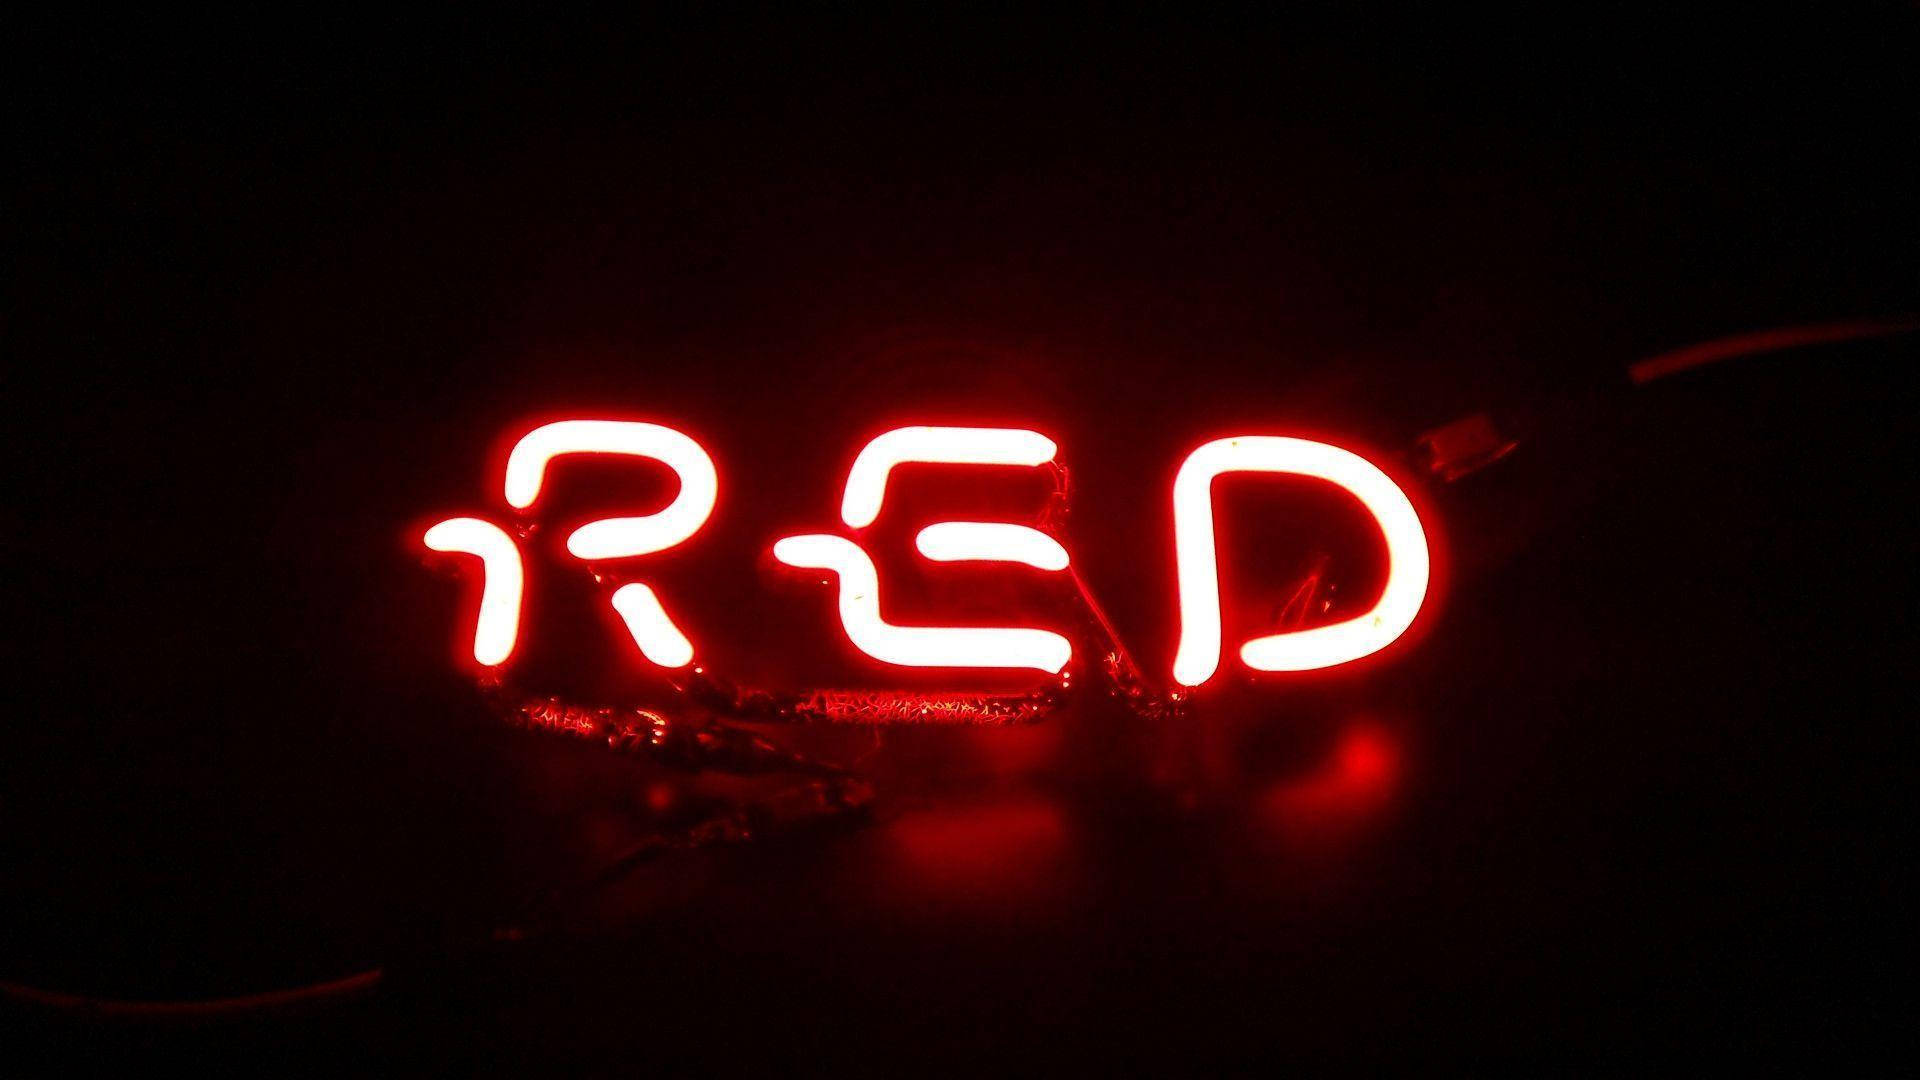 Red Aesthetic Neon Text Light Wallpaper